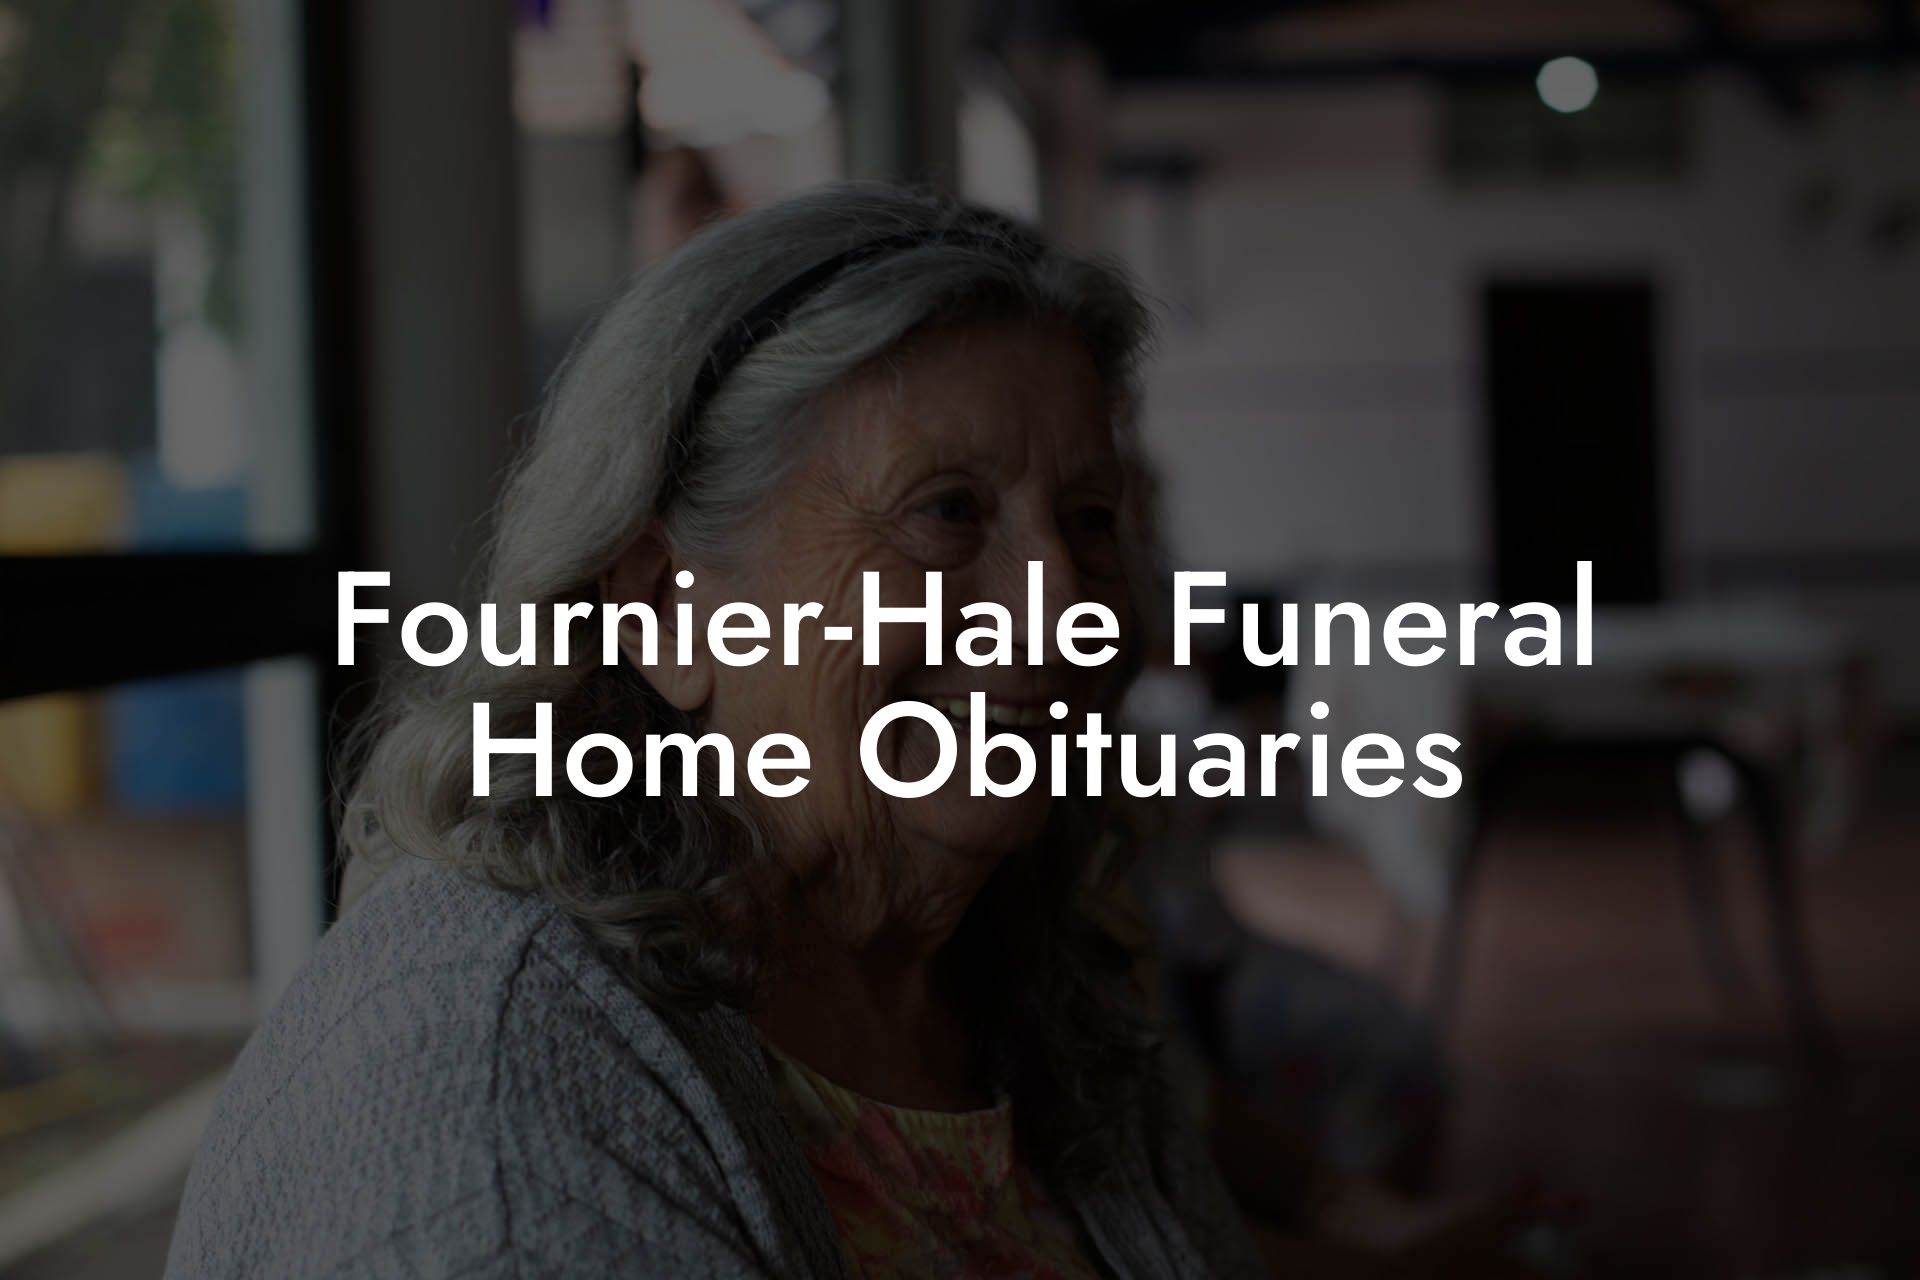 Fournier-Hale Funeral Home Obituaries